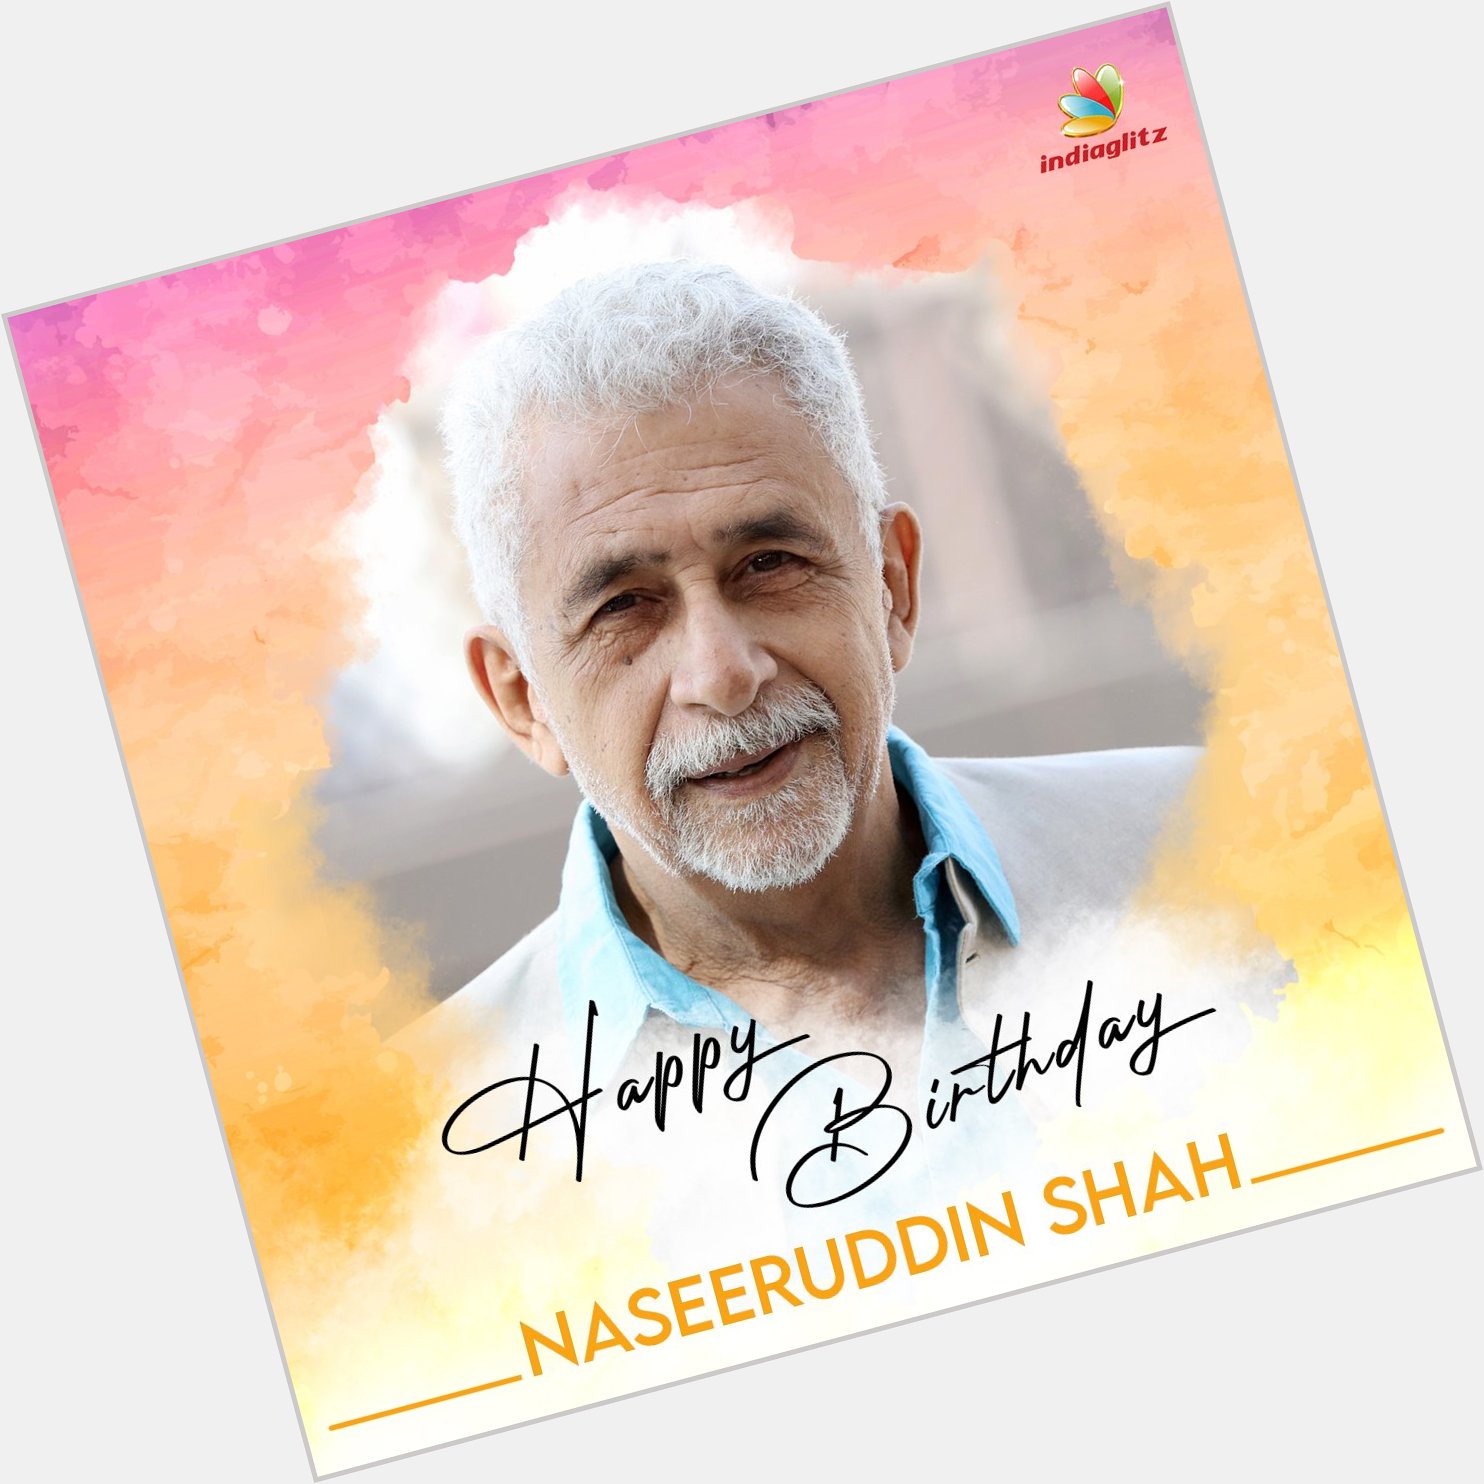 Wishing Actor Naseeruddin Shah a Very Happy Birthday   